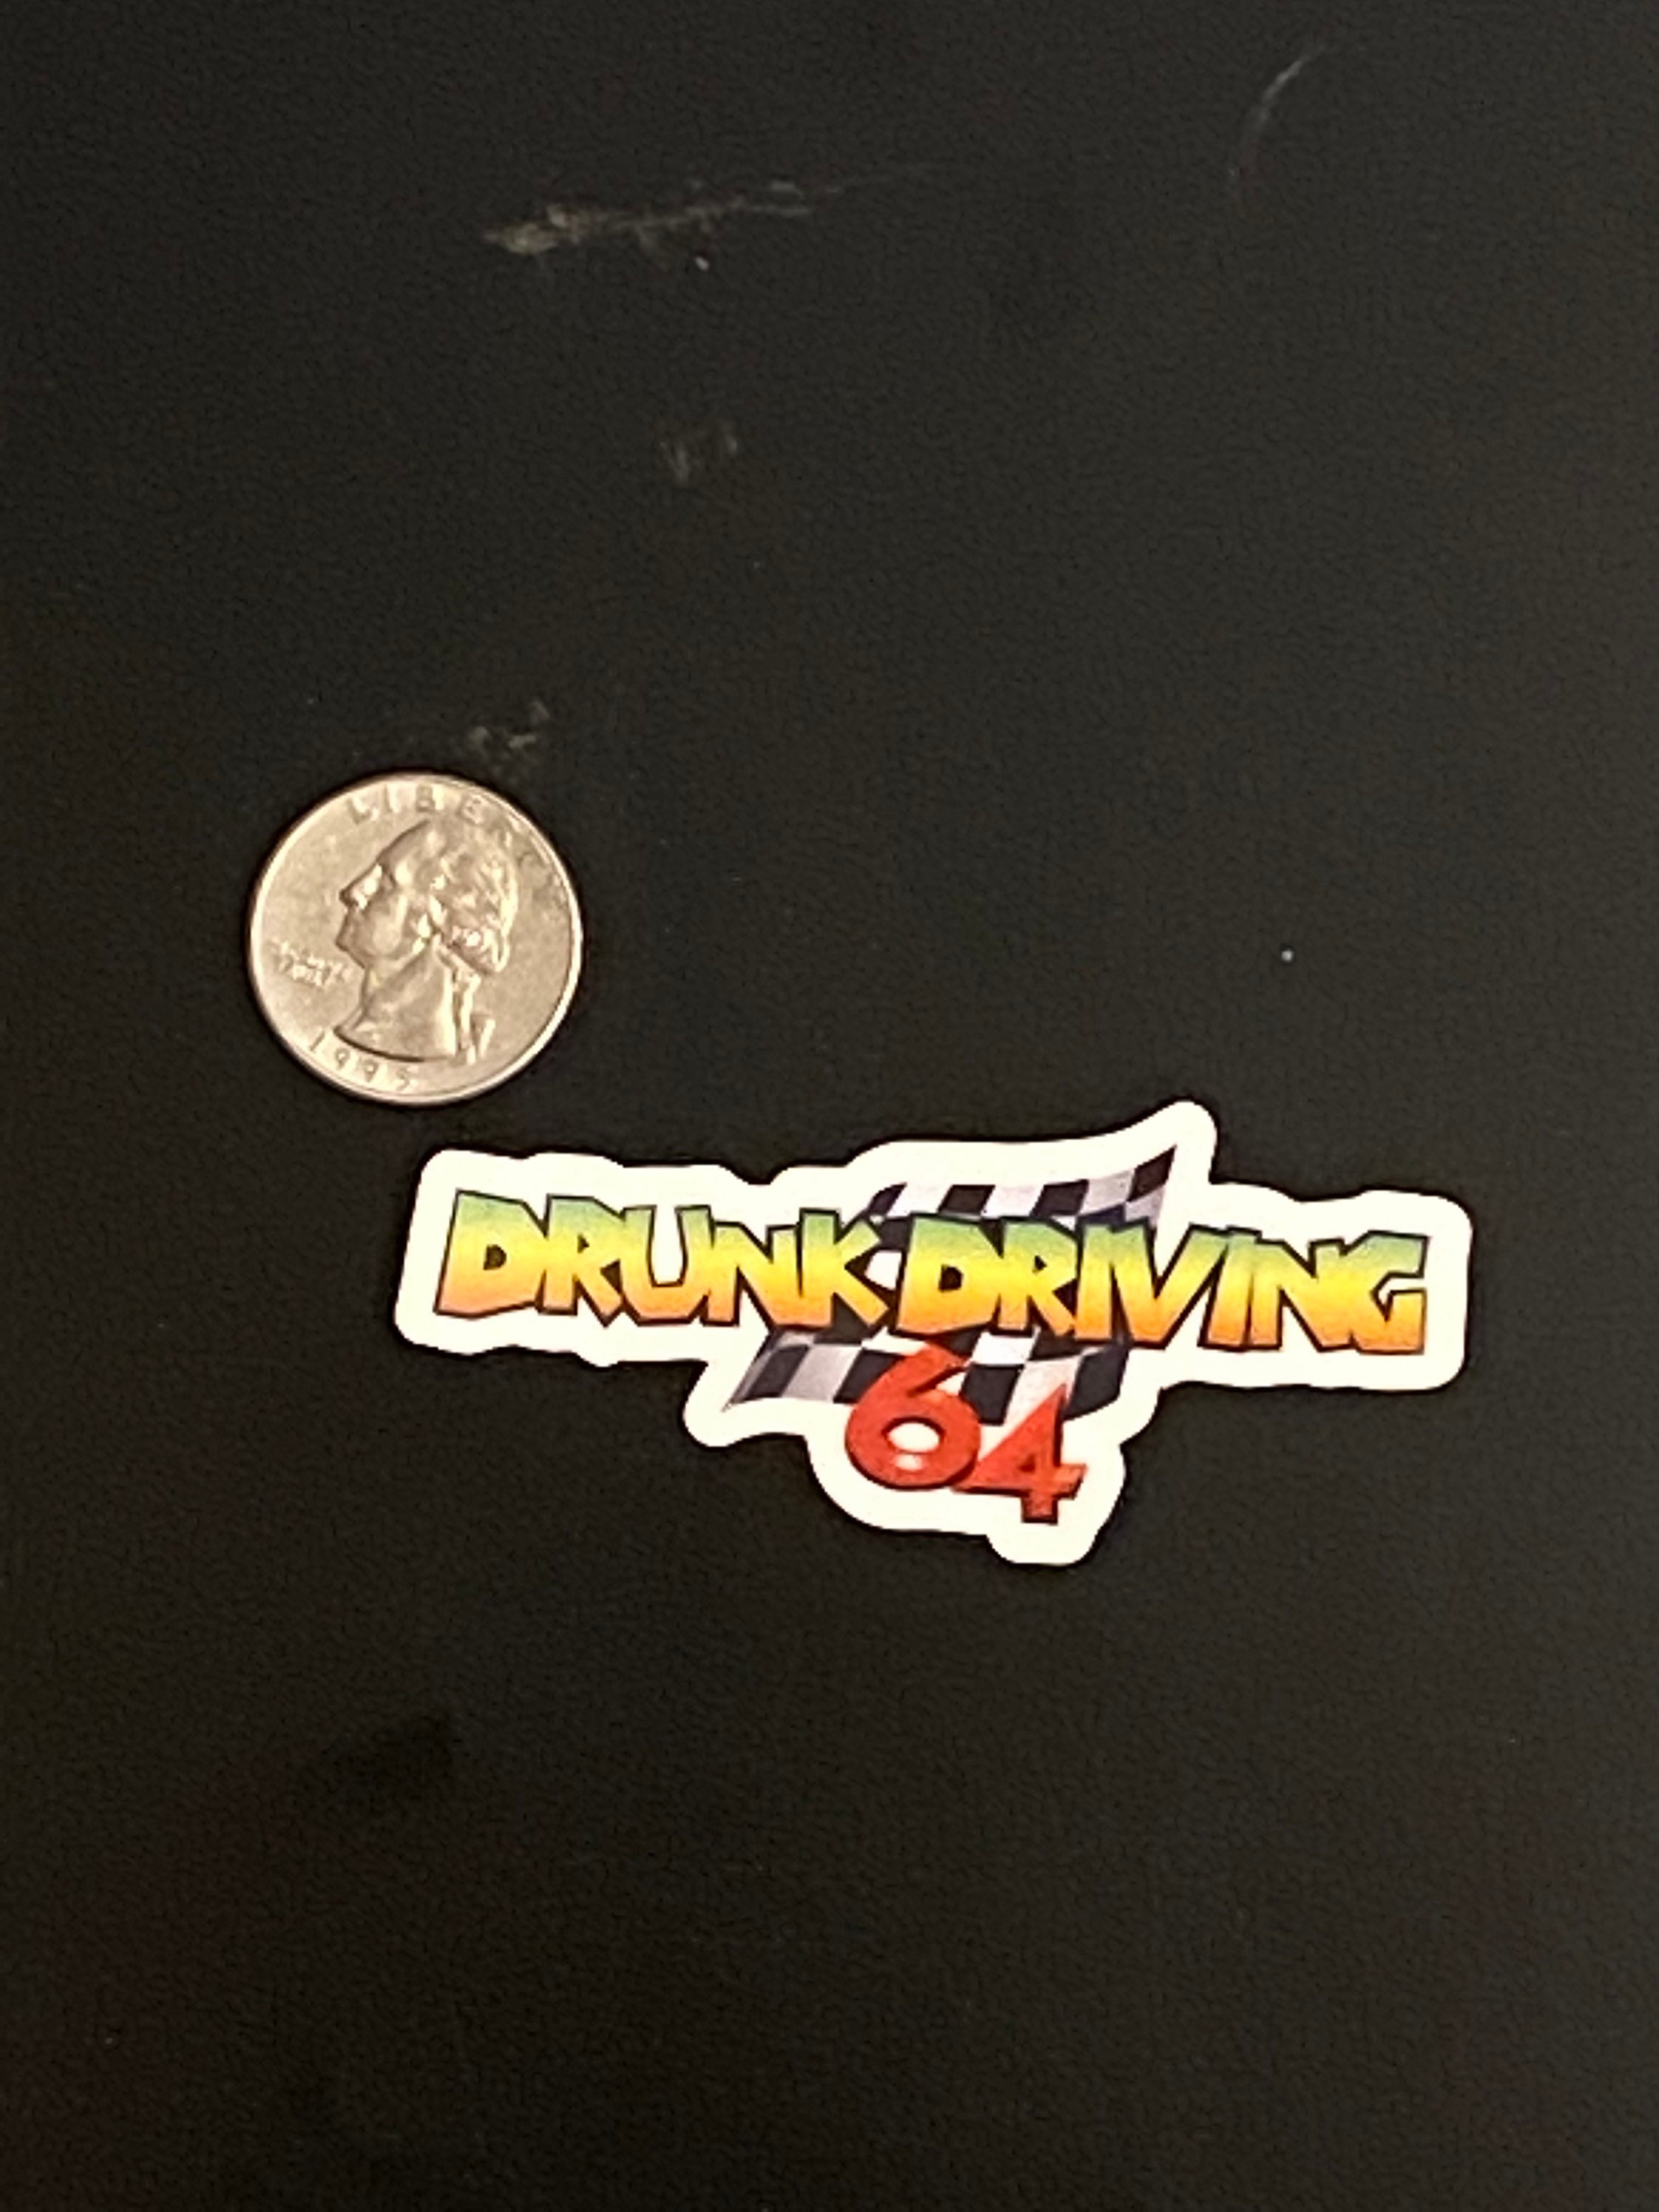 Drunk Driving - Mario Kart Tournament